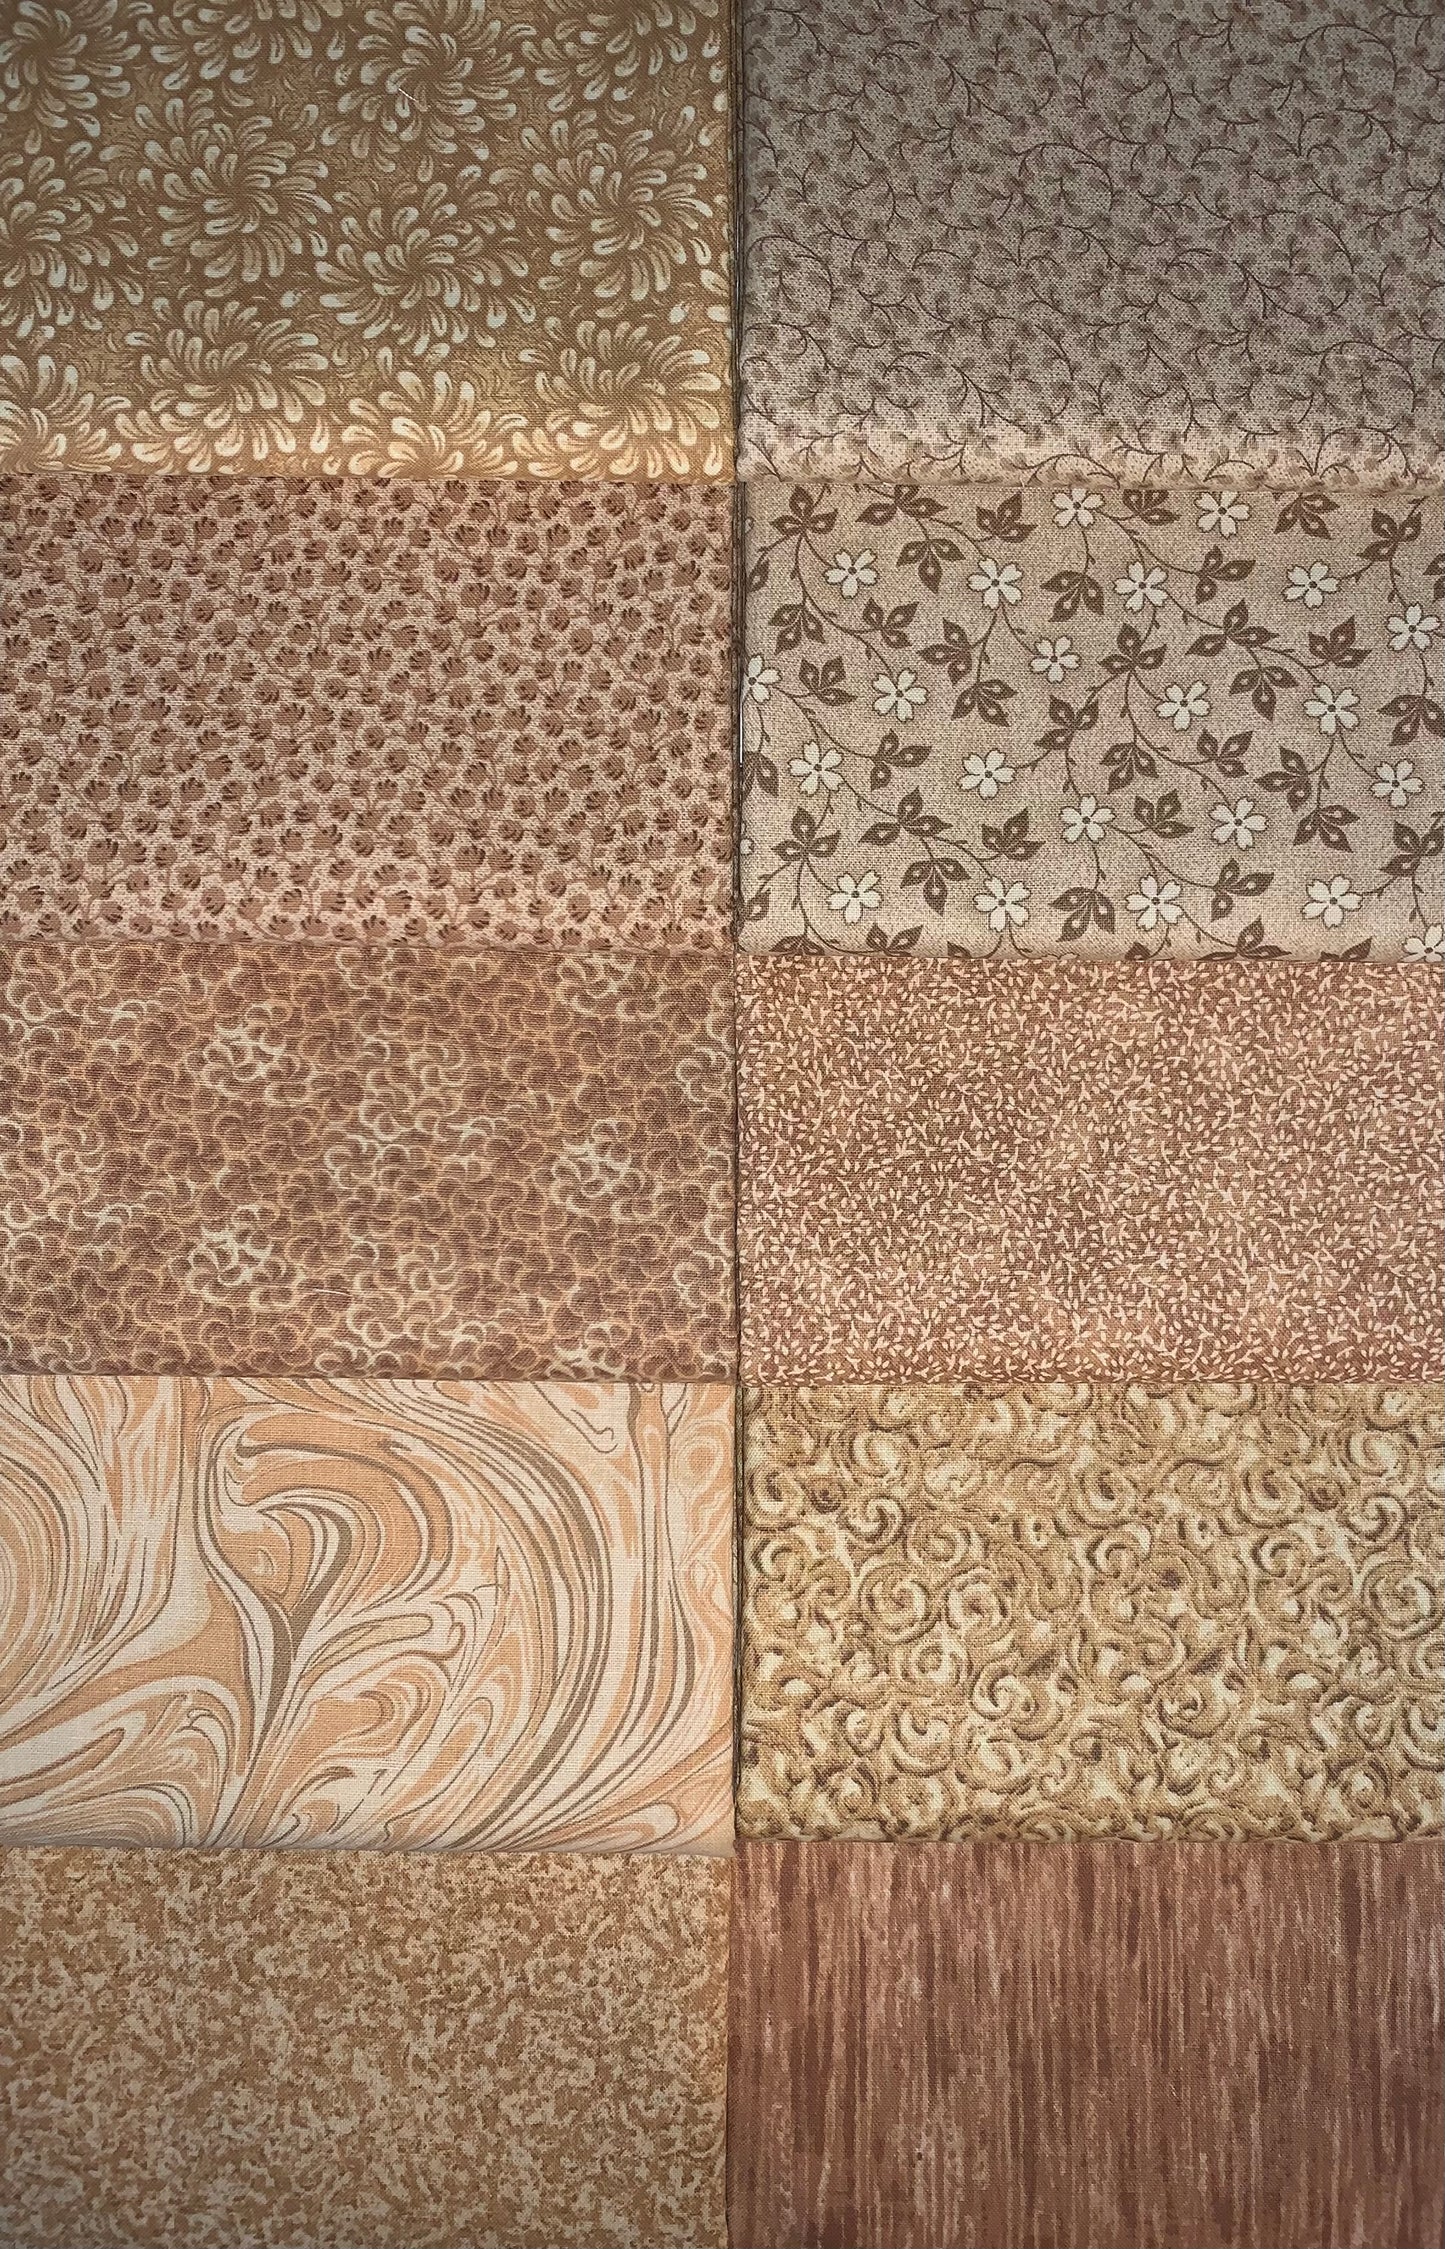 Basic Colors - Sand Half-yard Bundle - 10 Fabrics, 5 Total Yards